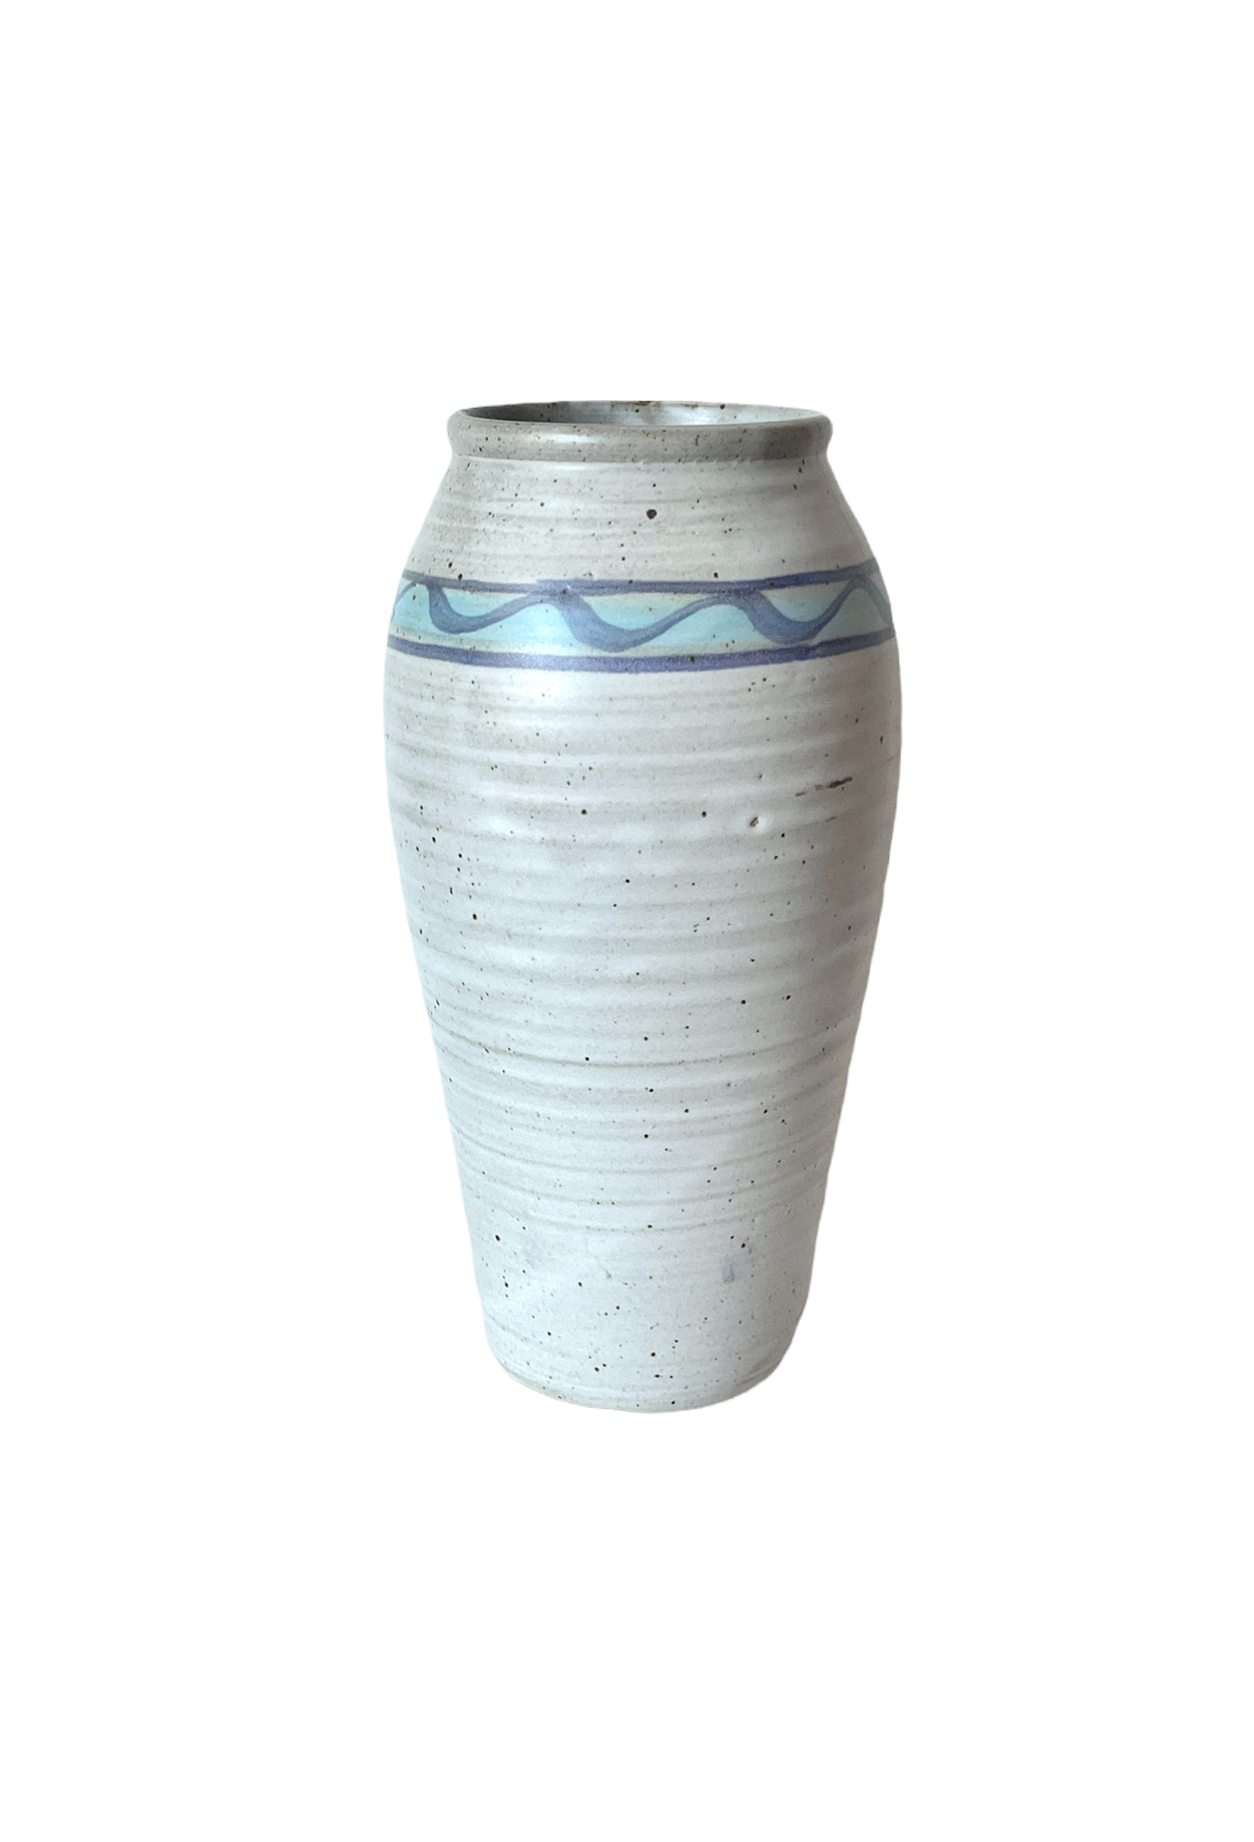 1970s Gray Speckled Pottery Vessel Vase~P77657659